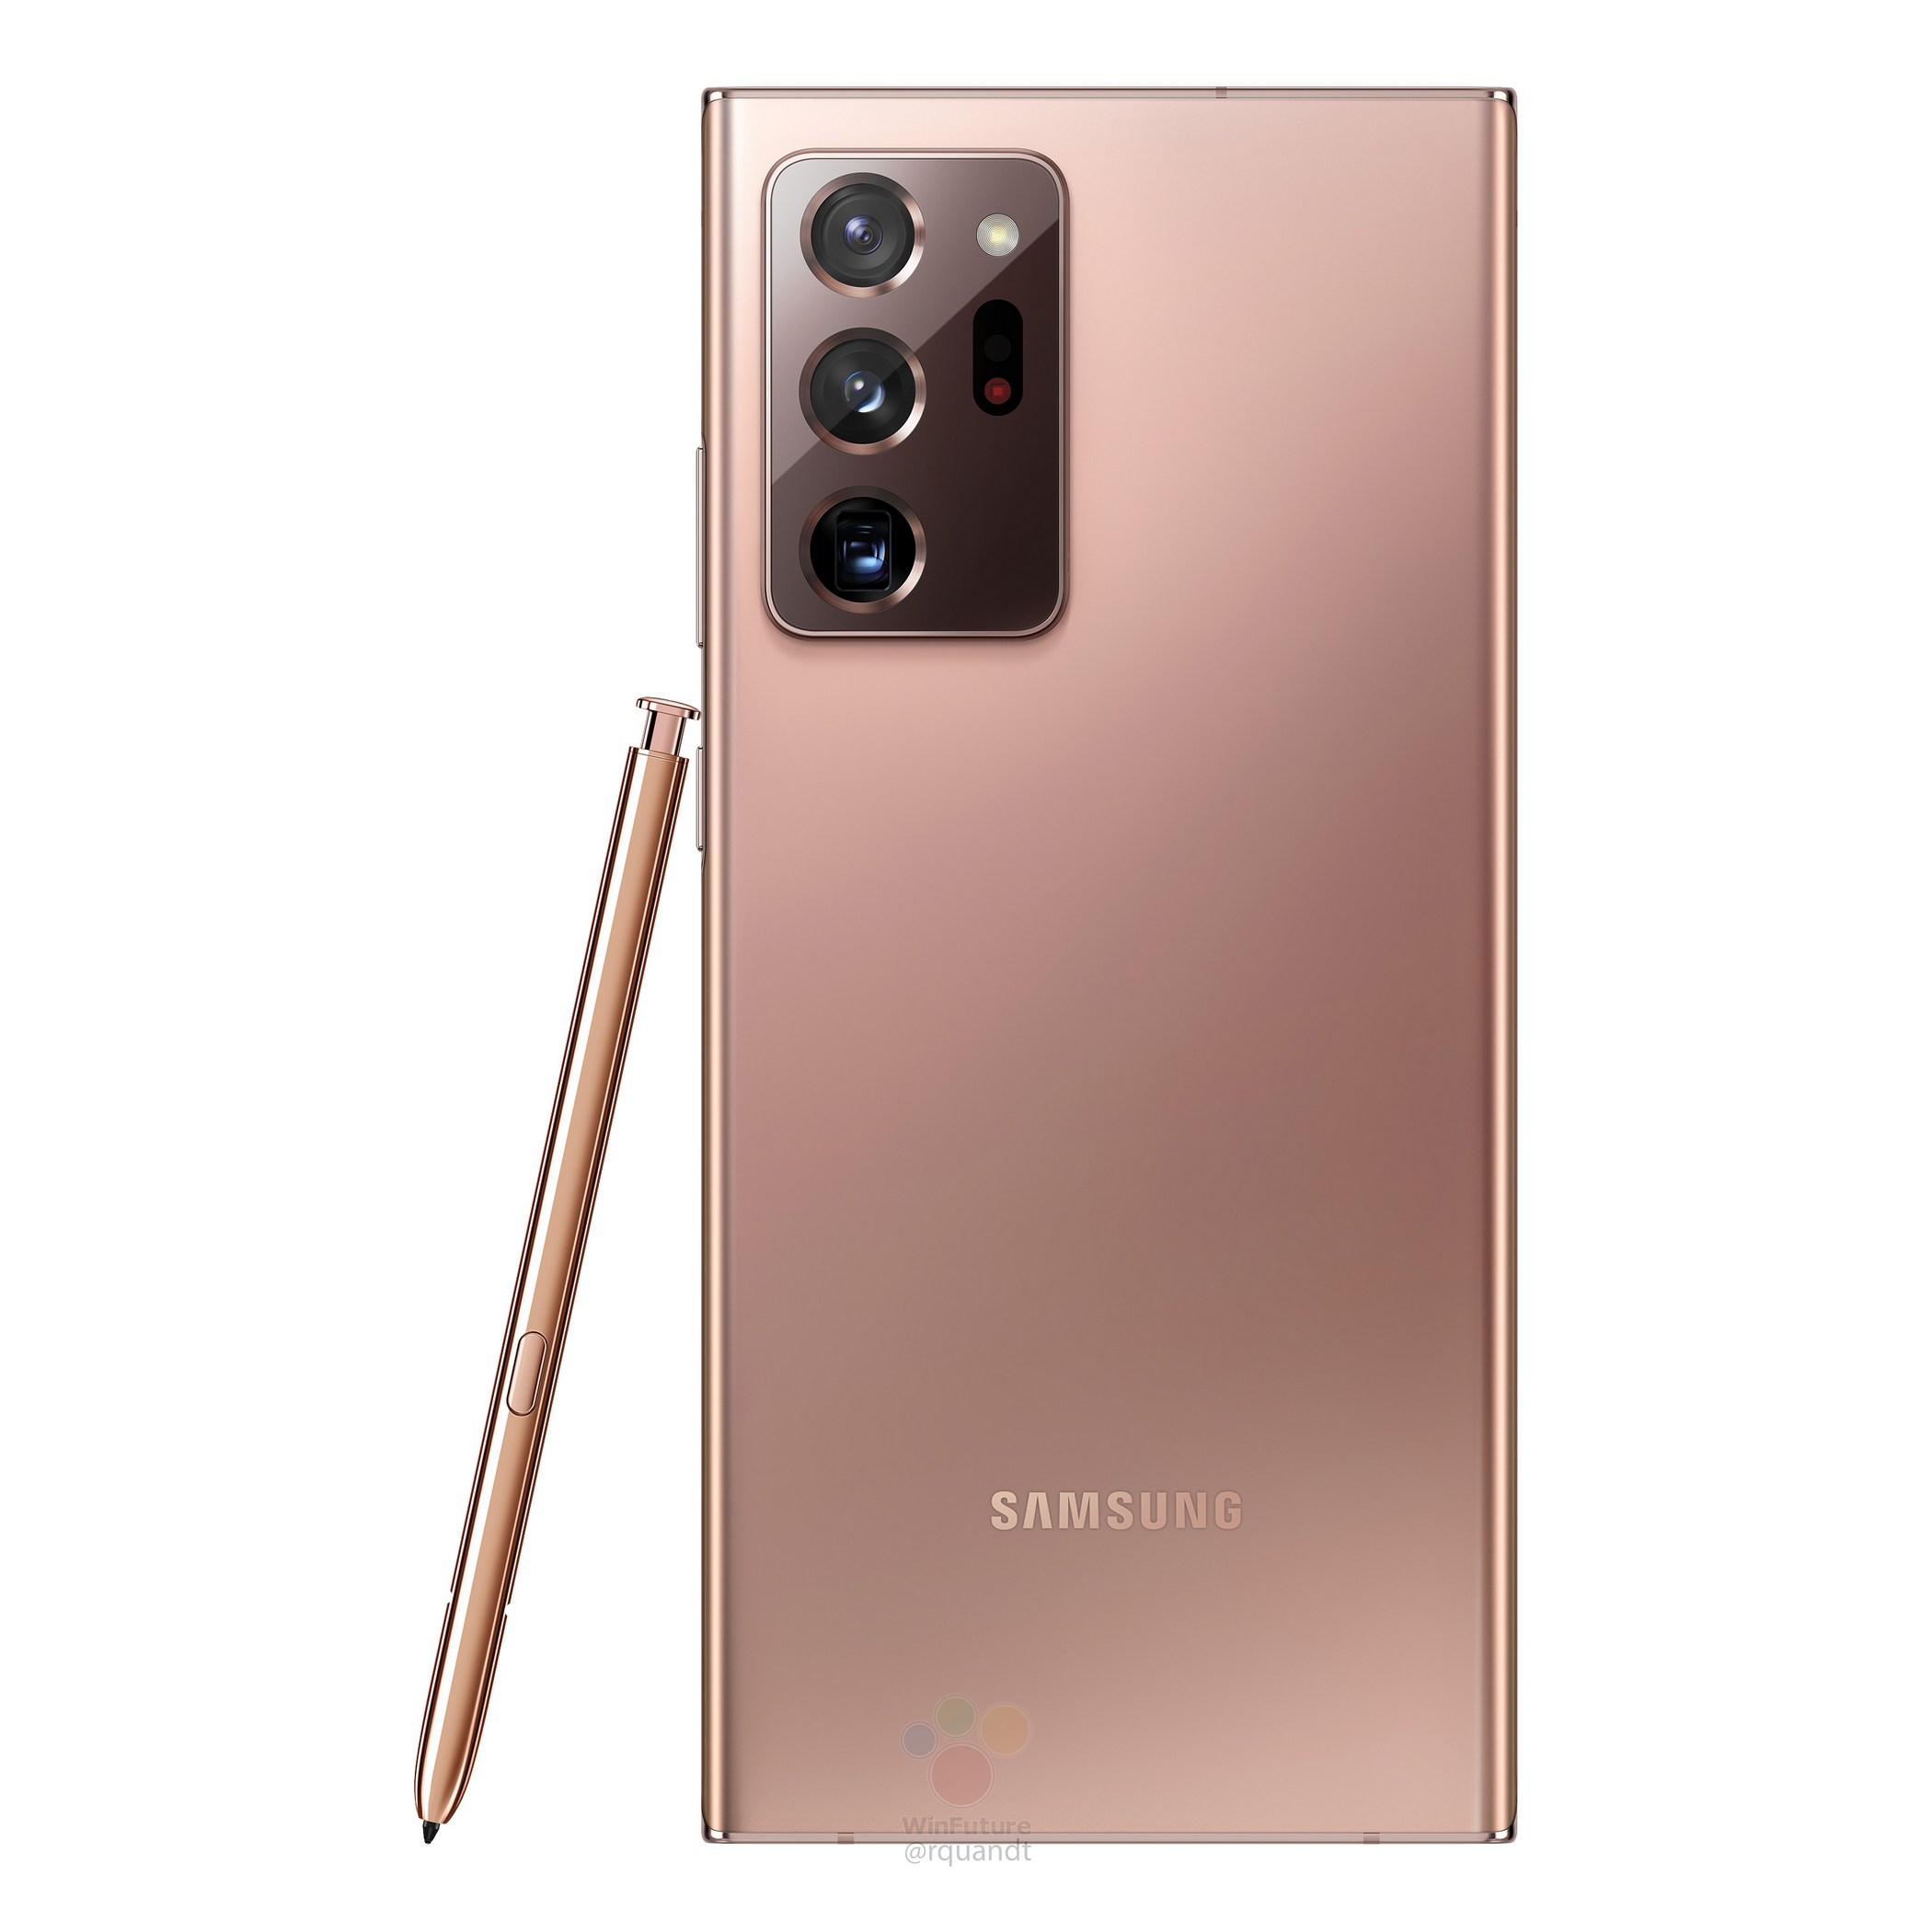 Samsung-Galaxy-Note-20-Ultra-1595370169-0-0.jpg